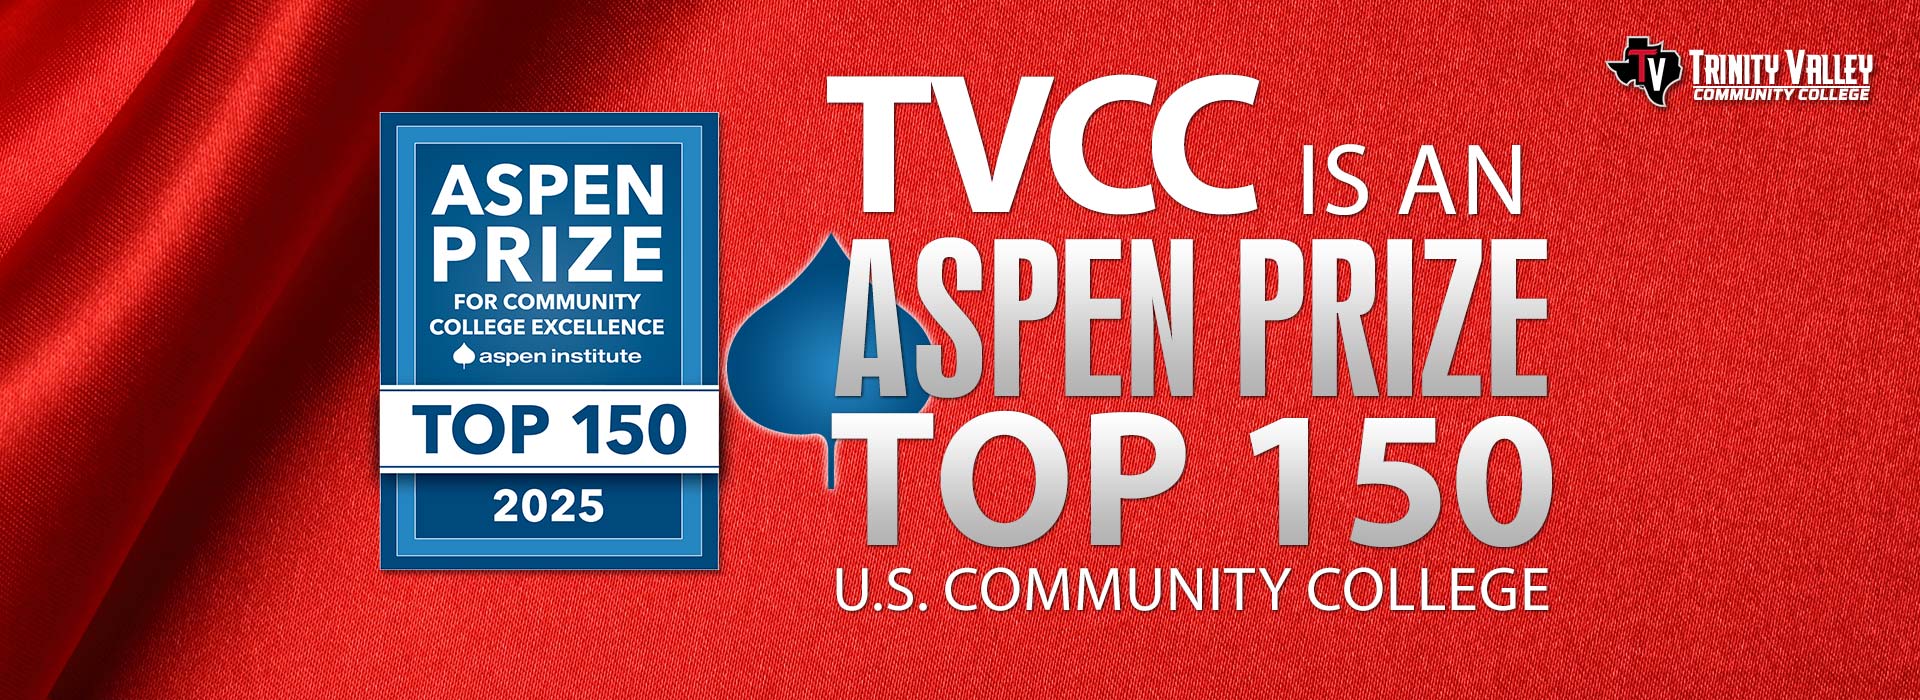 TVCC is an Aspen Prize Top 150 U.S. Community College